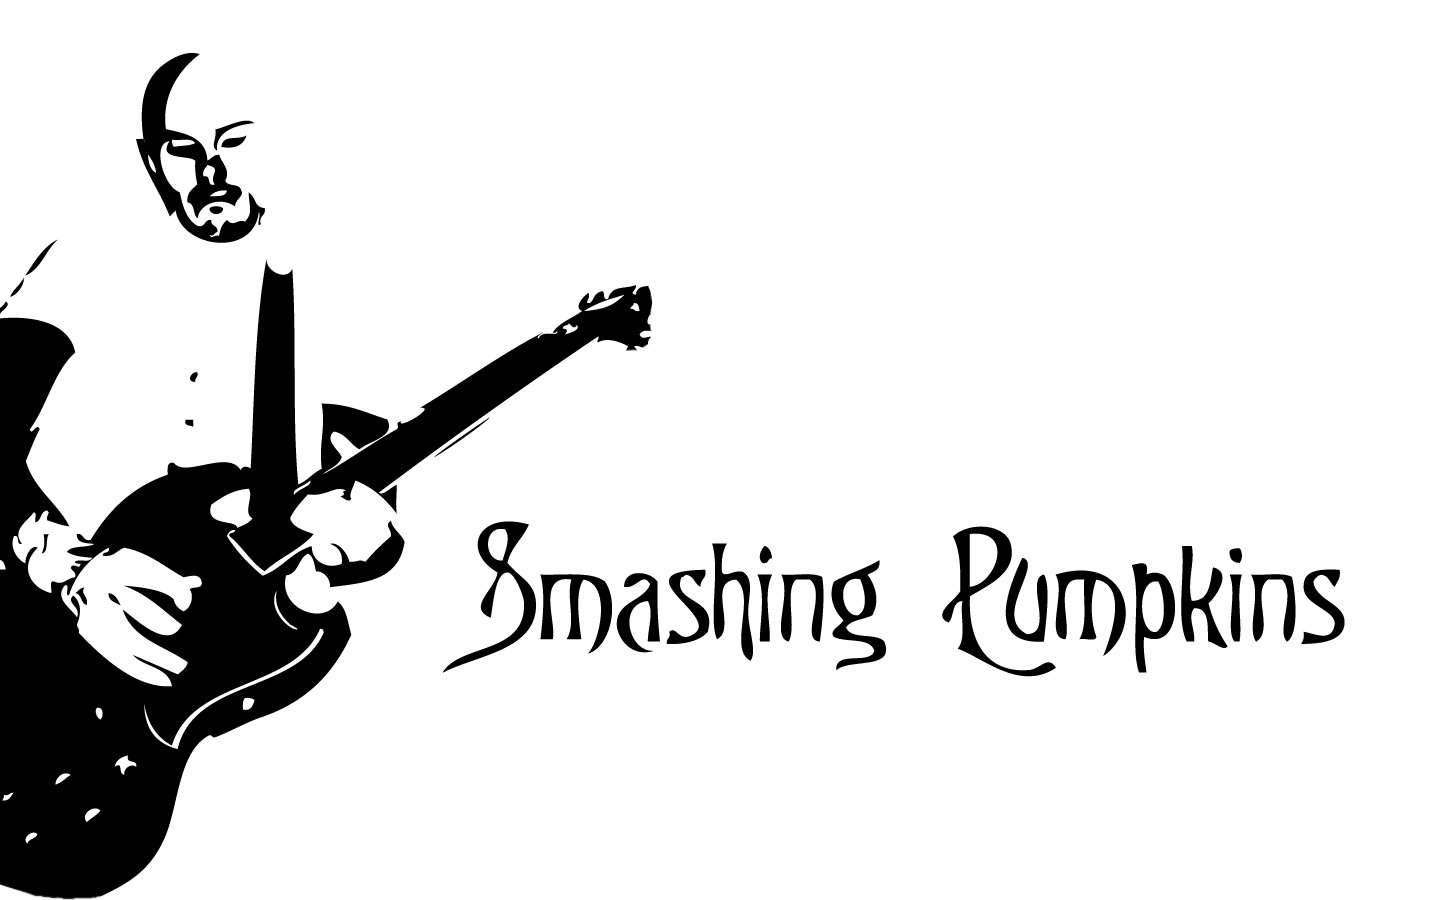 Smashing Pumpkins Wallpaper by LynchMob10-09 on DeviantArt